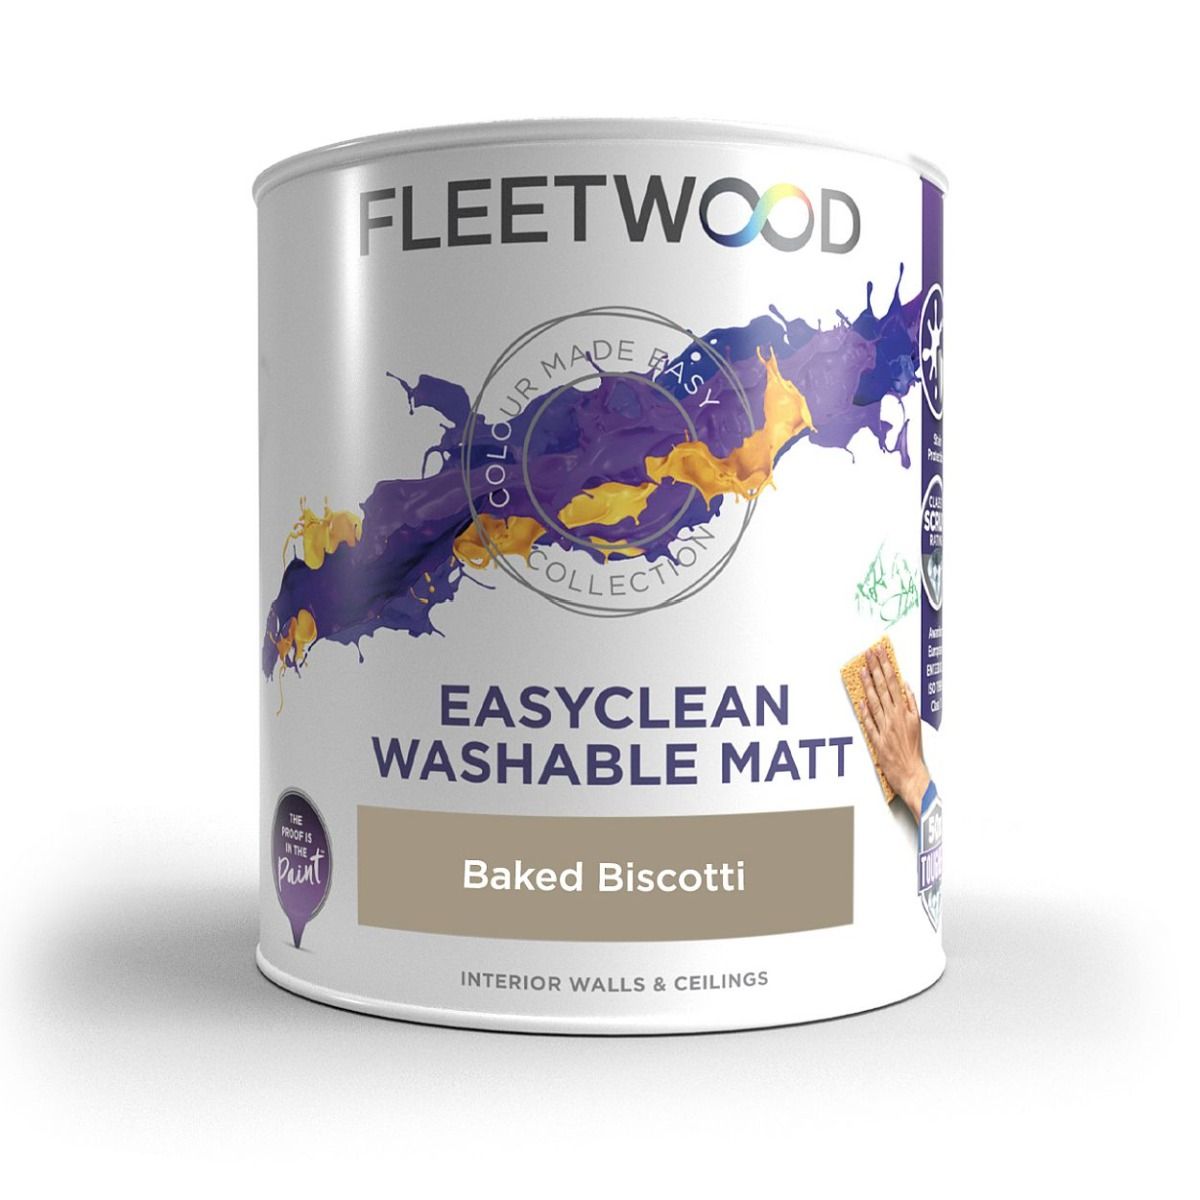 Fleetwood Easyclean Washable Matt - Baked Biscotti